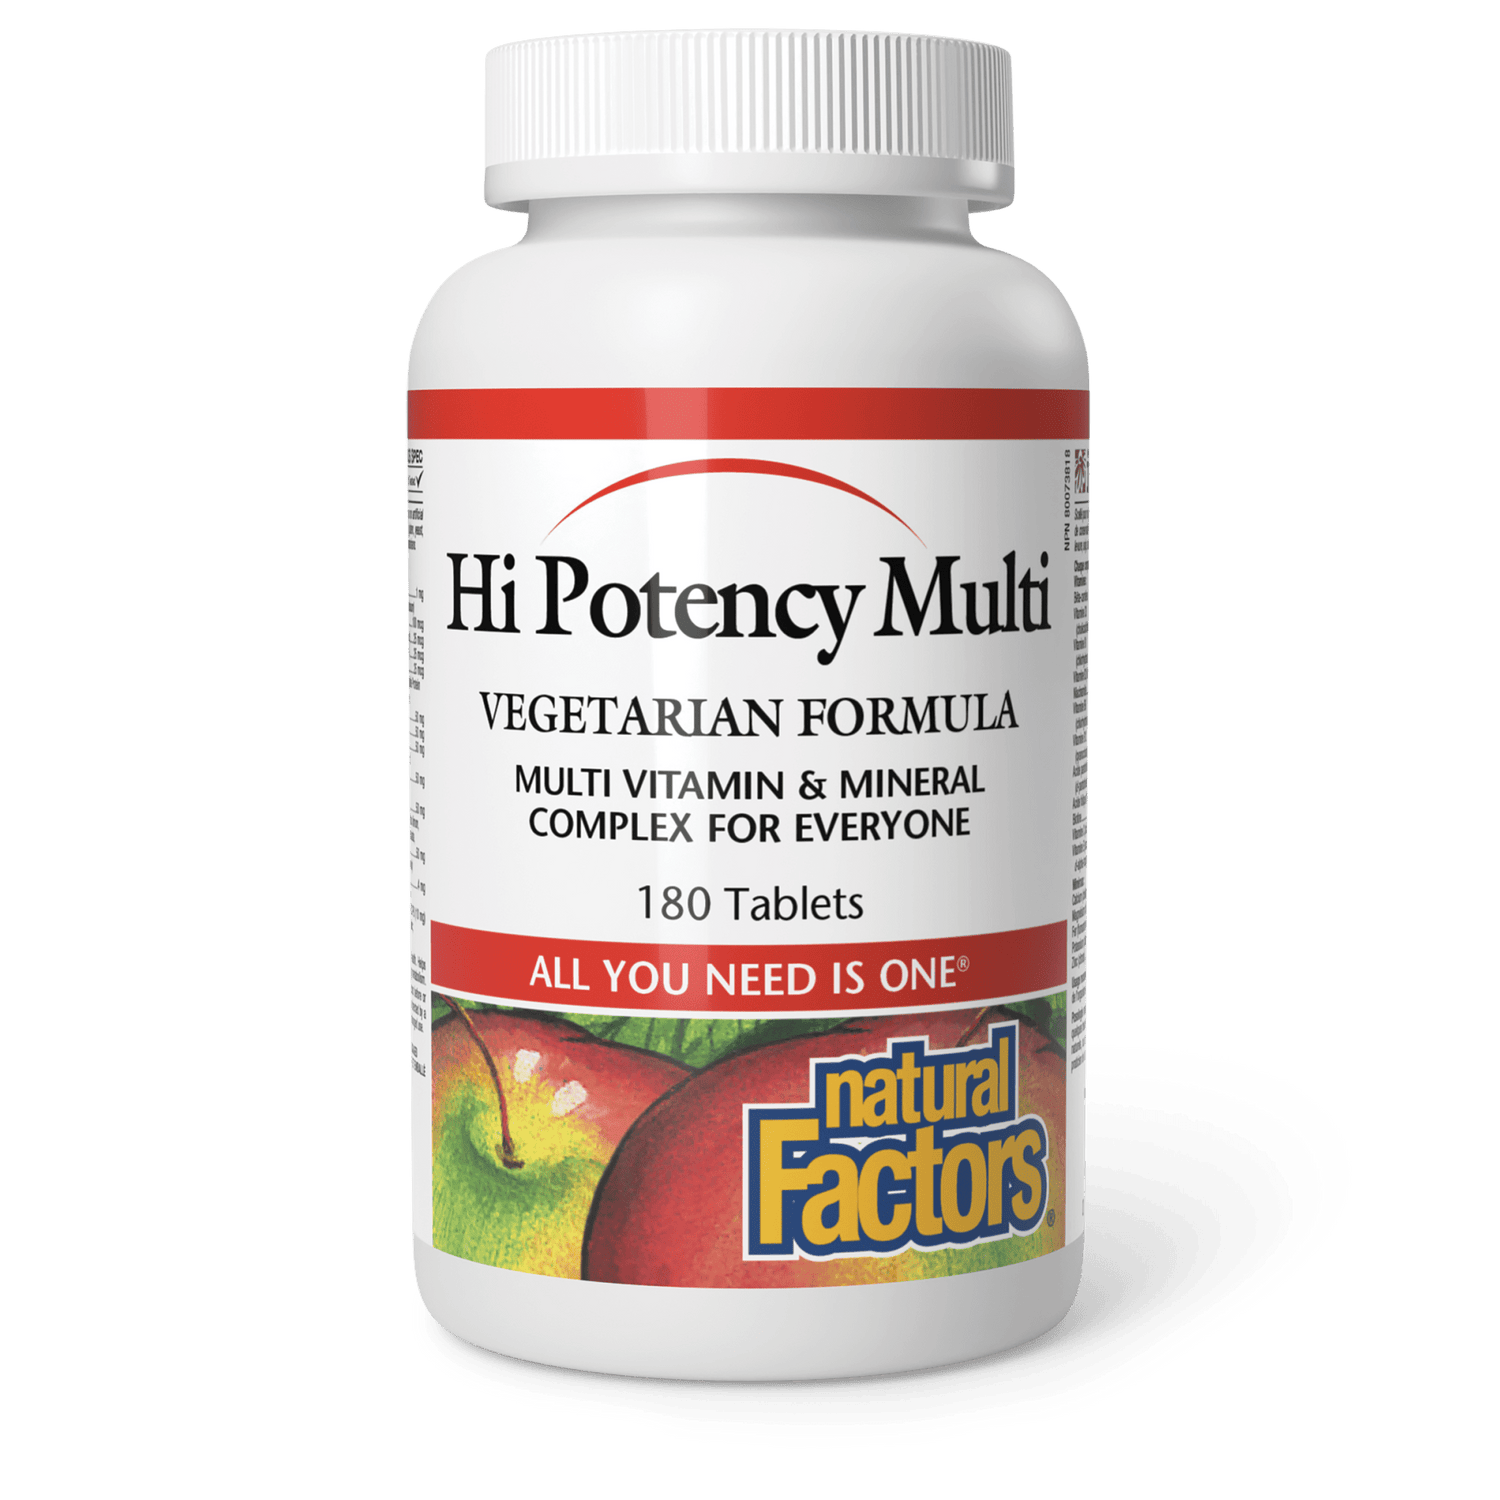 Hi Potency Multi Vegetarian Formula, Natural Factors|v|image|1519